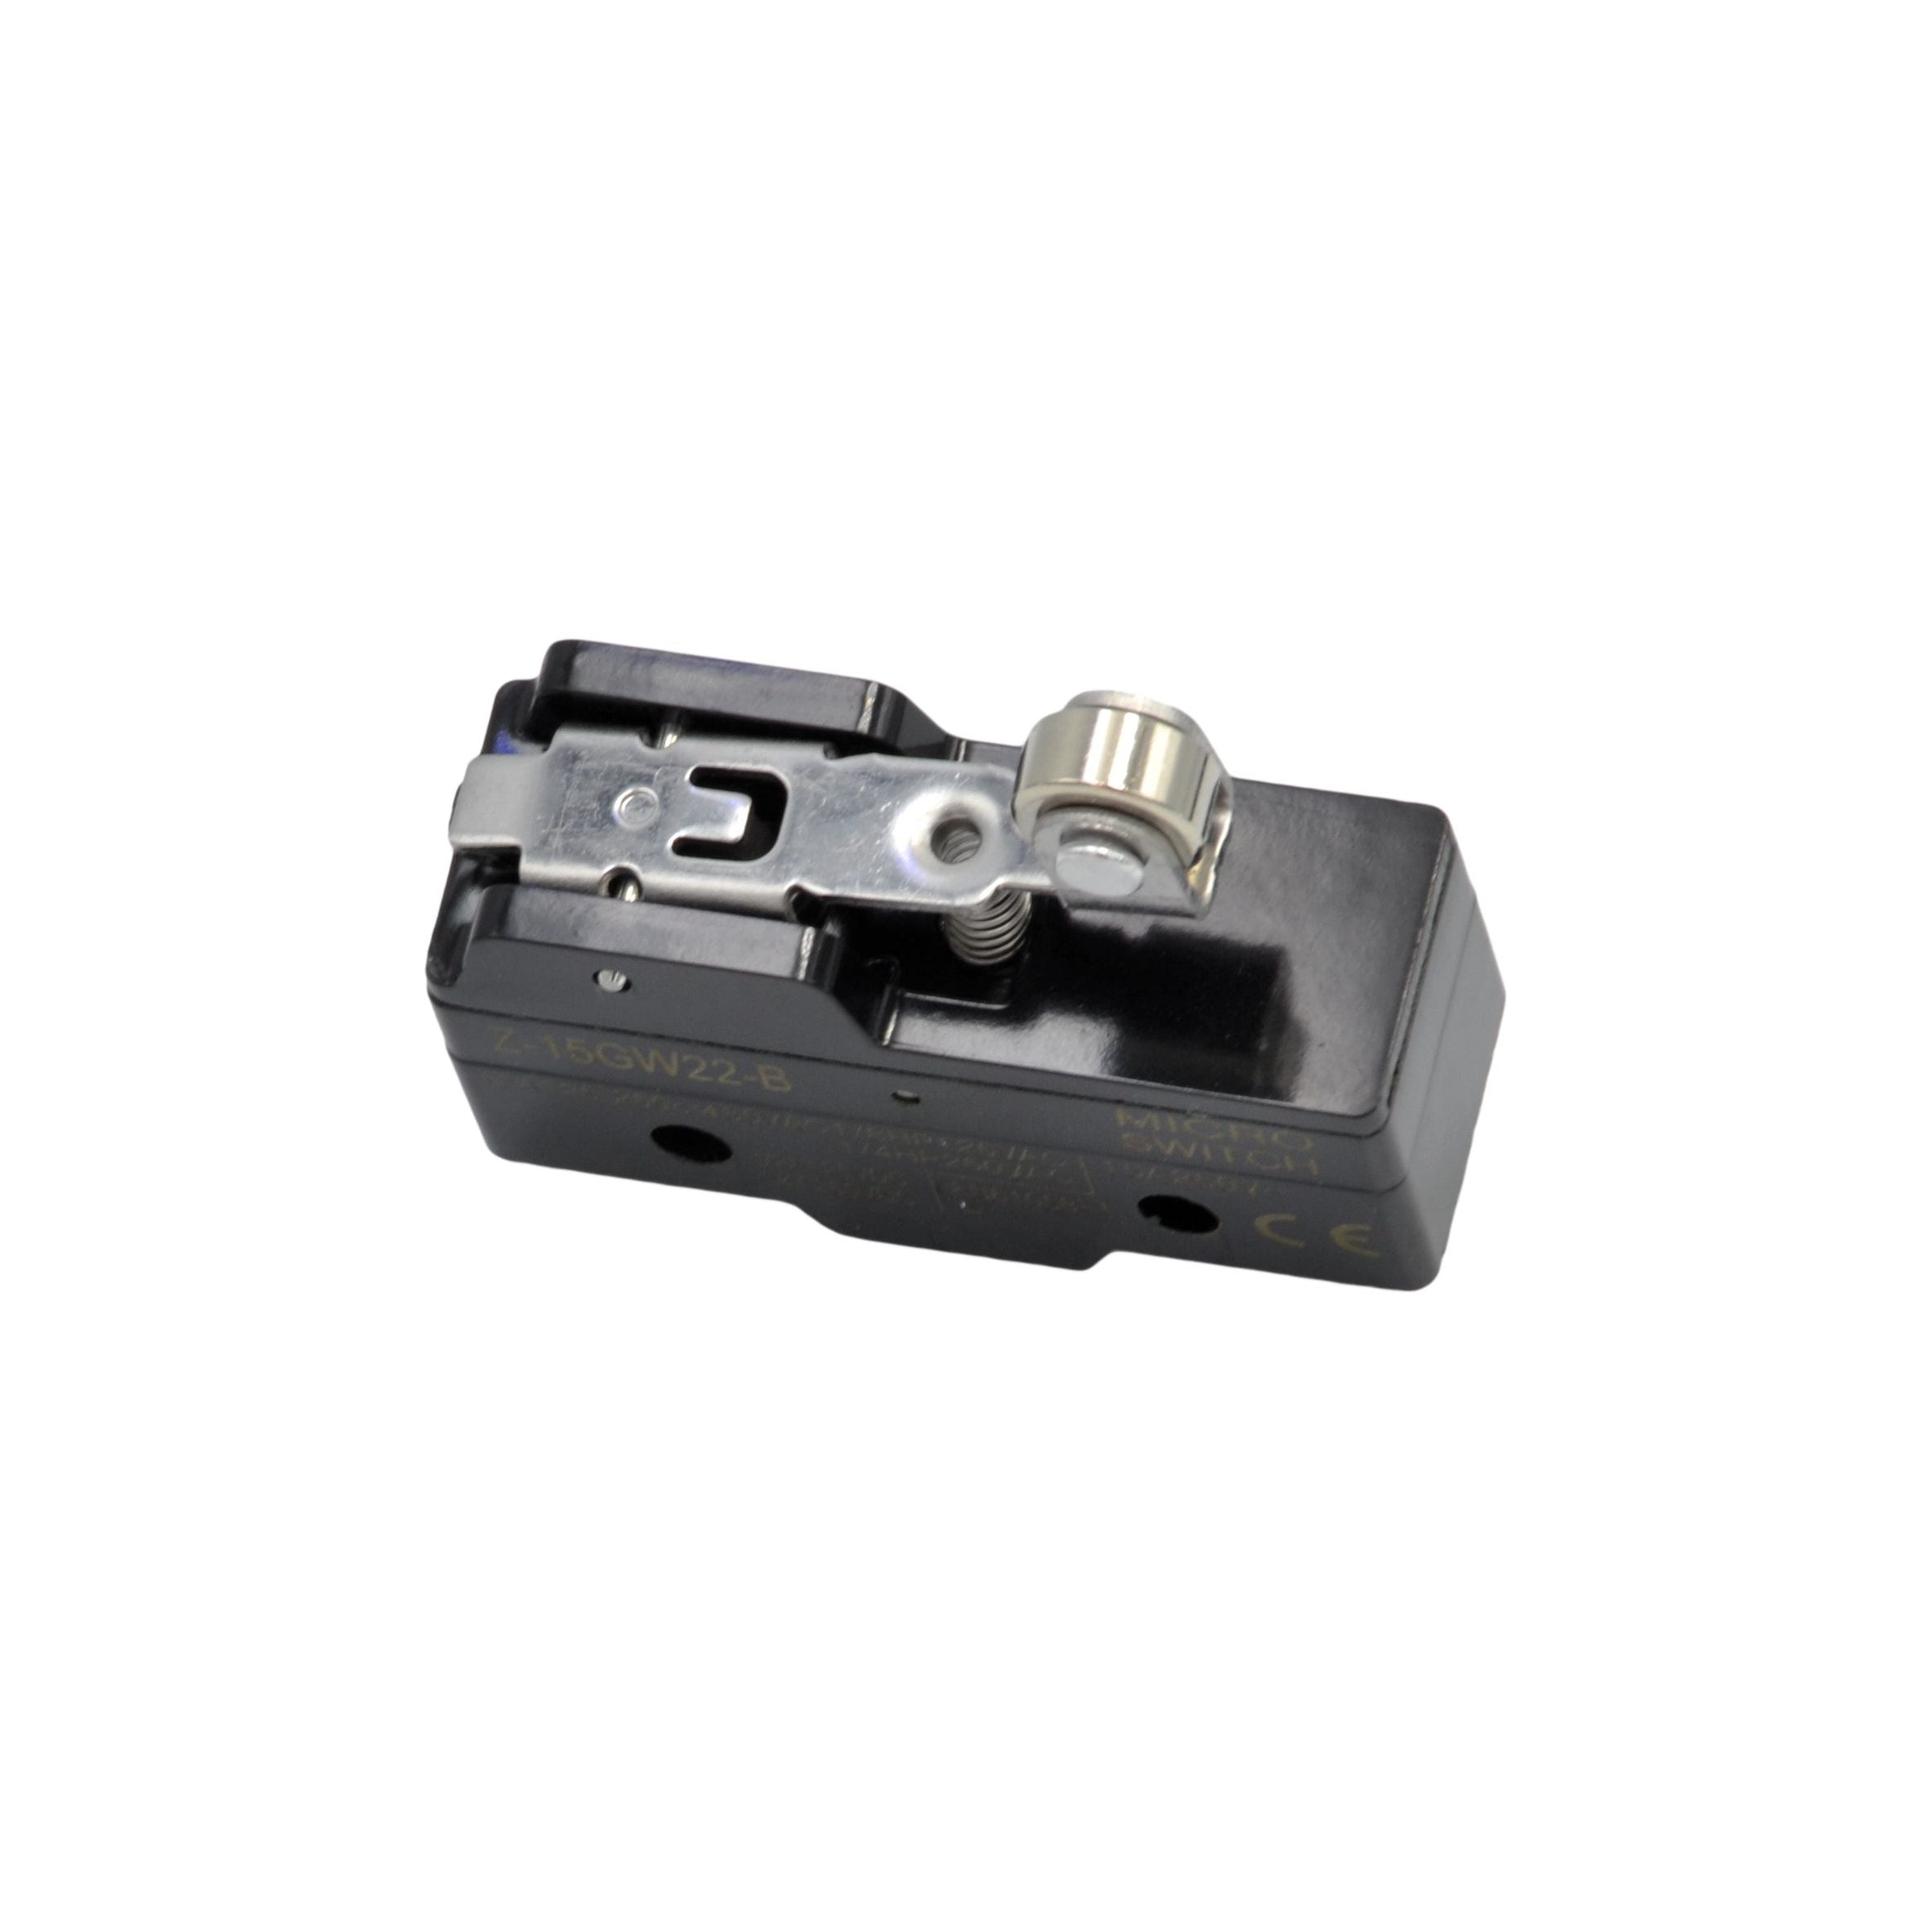 Z-15GW22-B Short Hinge Roller Lever Micro Limit Switch